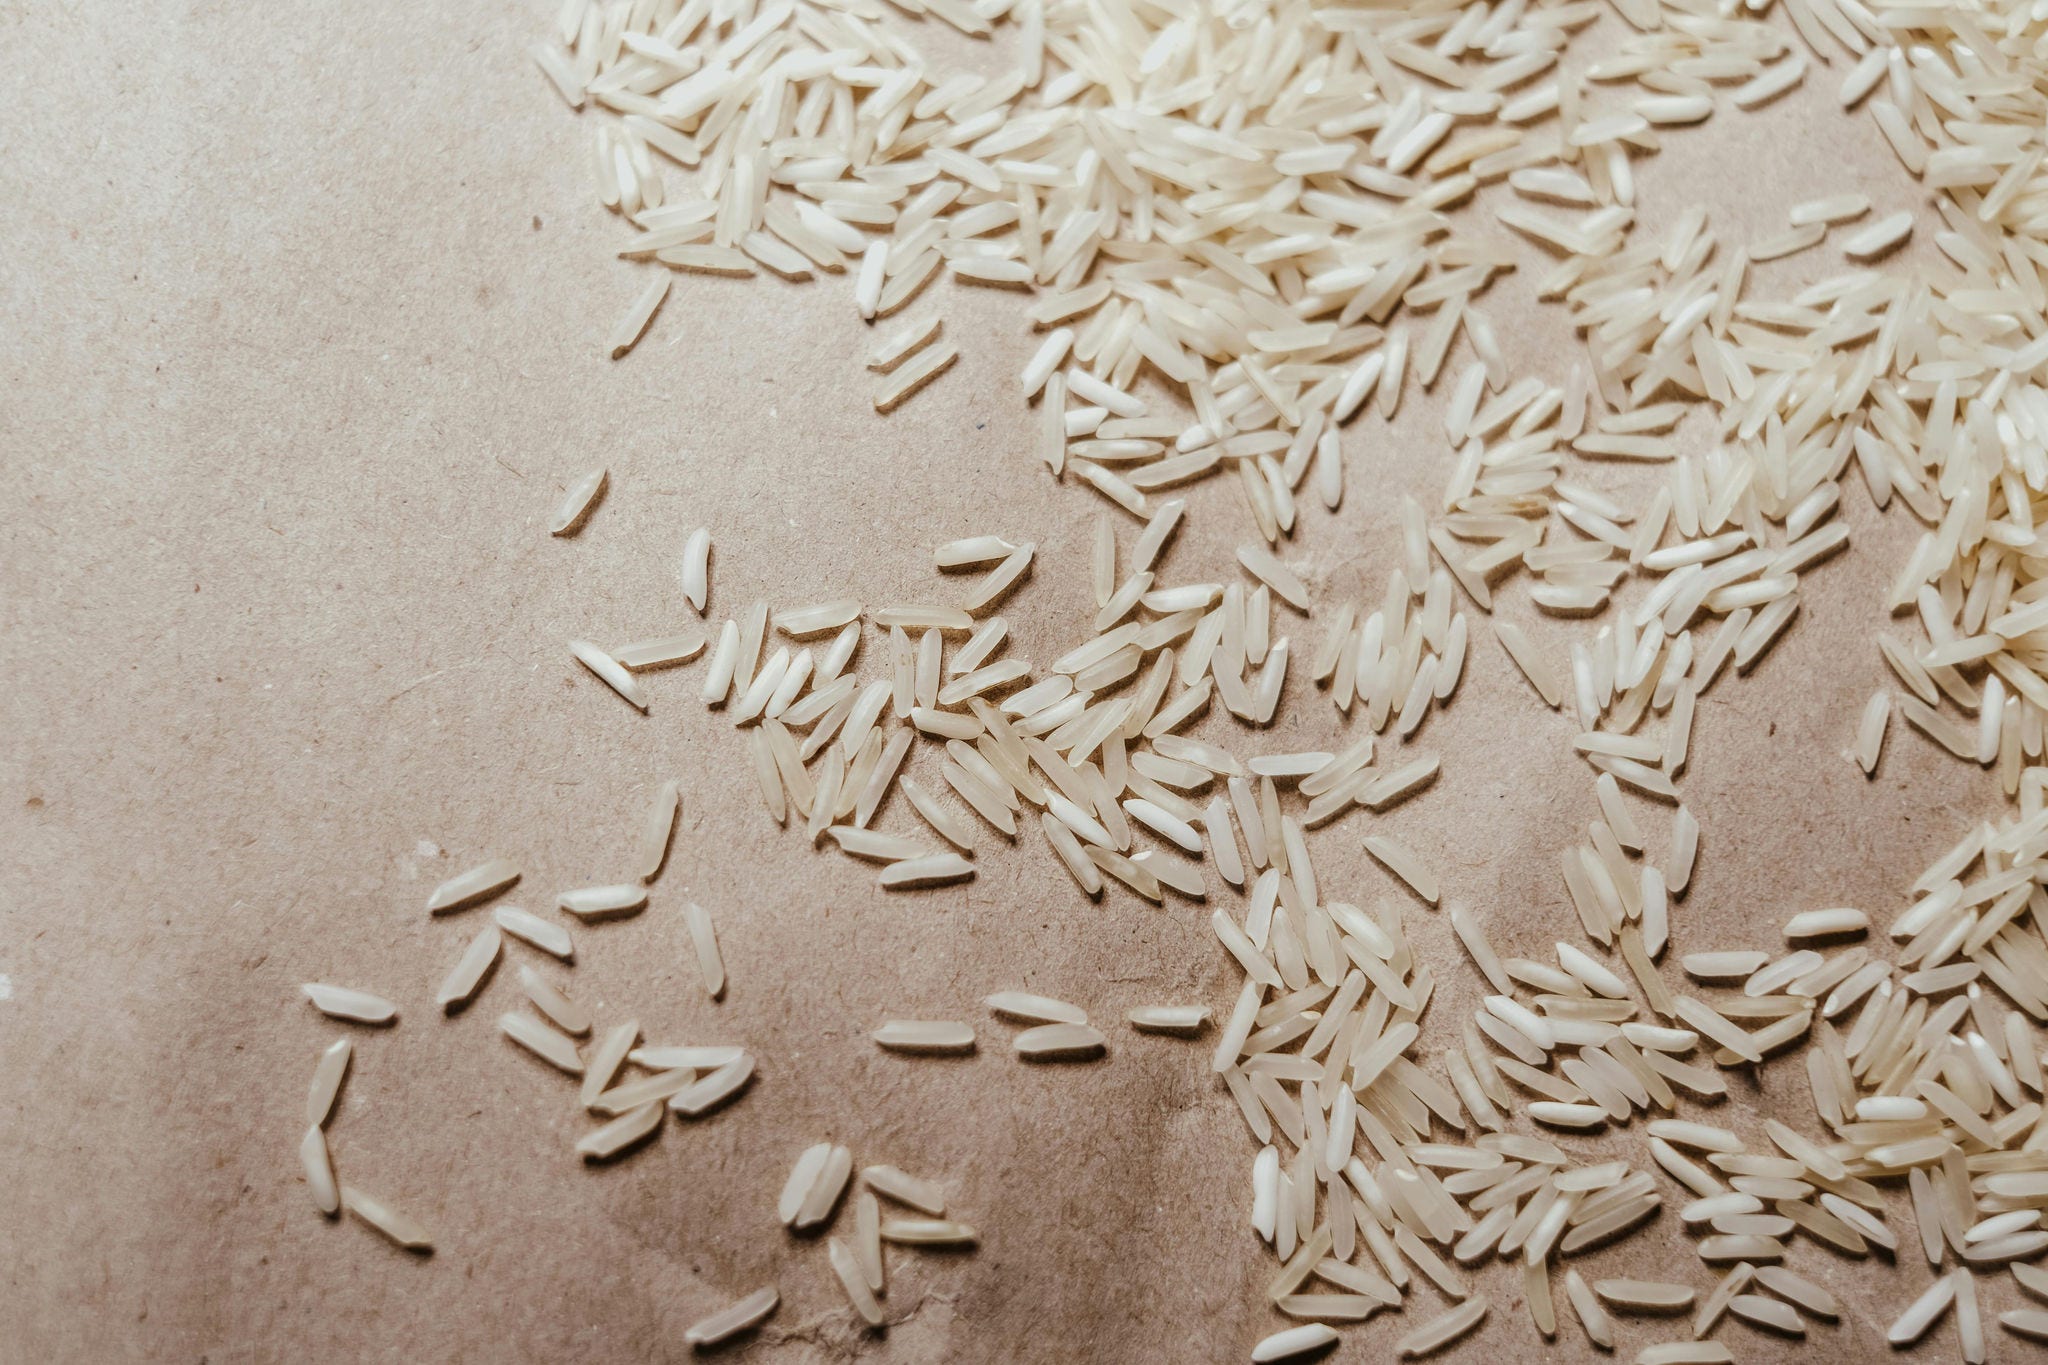 Imagem ilustrativa de arroz